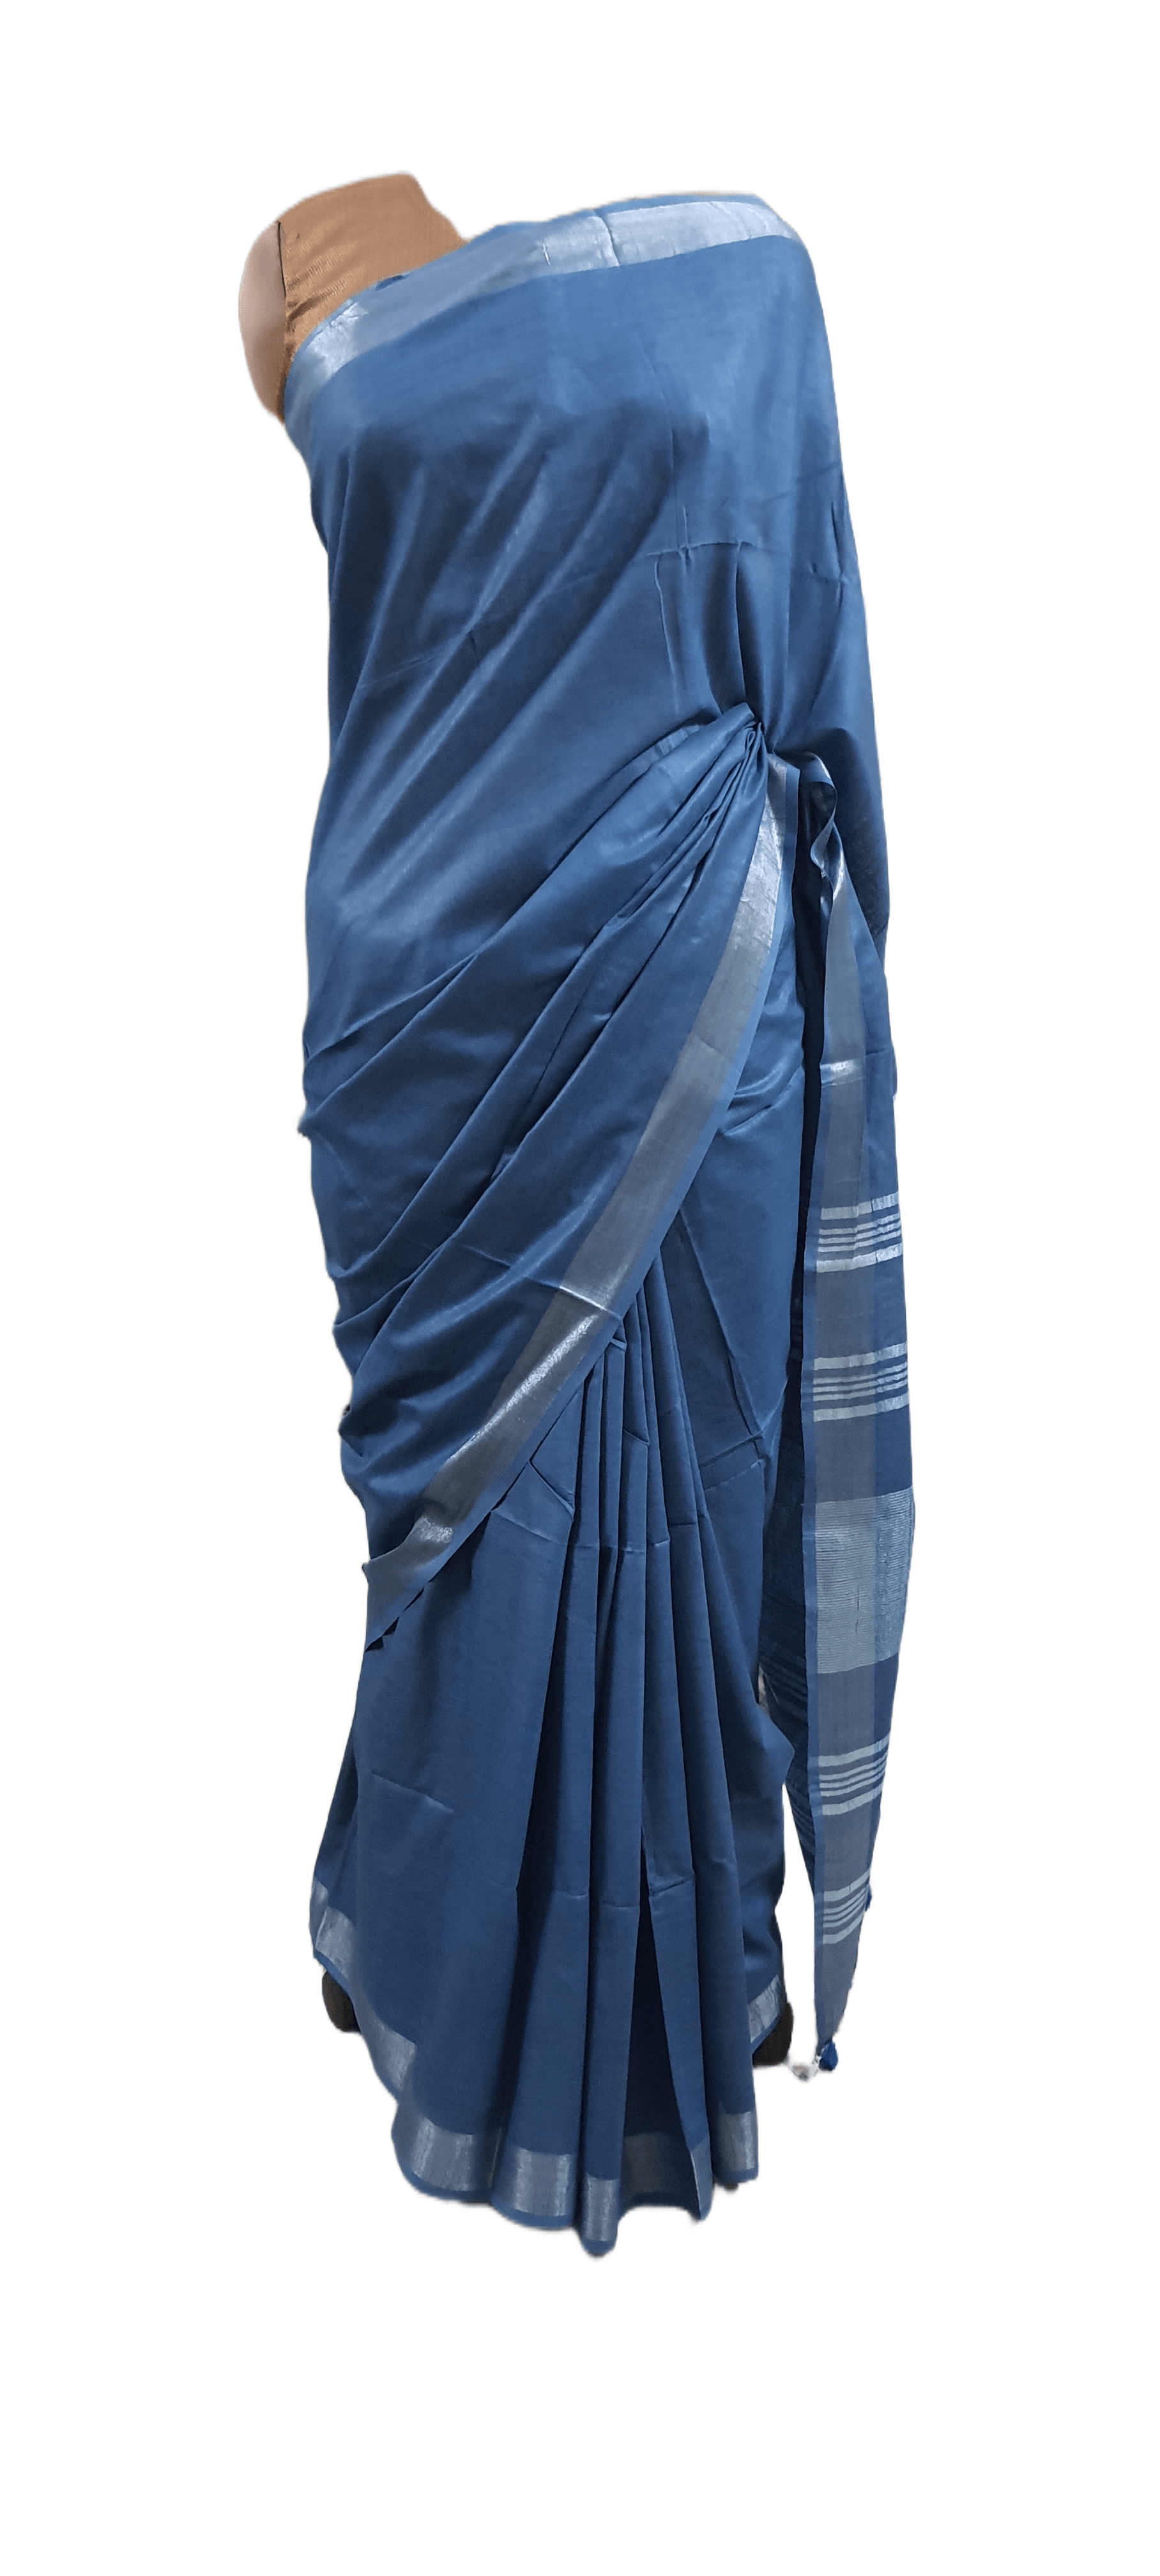 Indigo Linen Cotton Saree with Pure Ikkat Cotton Blouse BHR04 - Ethnic's By Anvi Creations